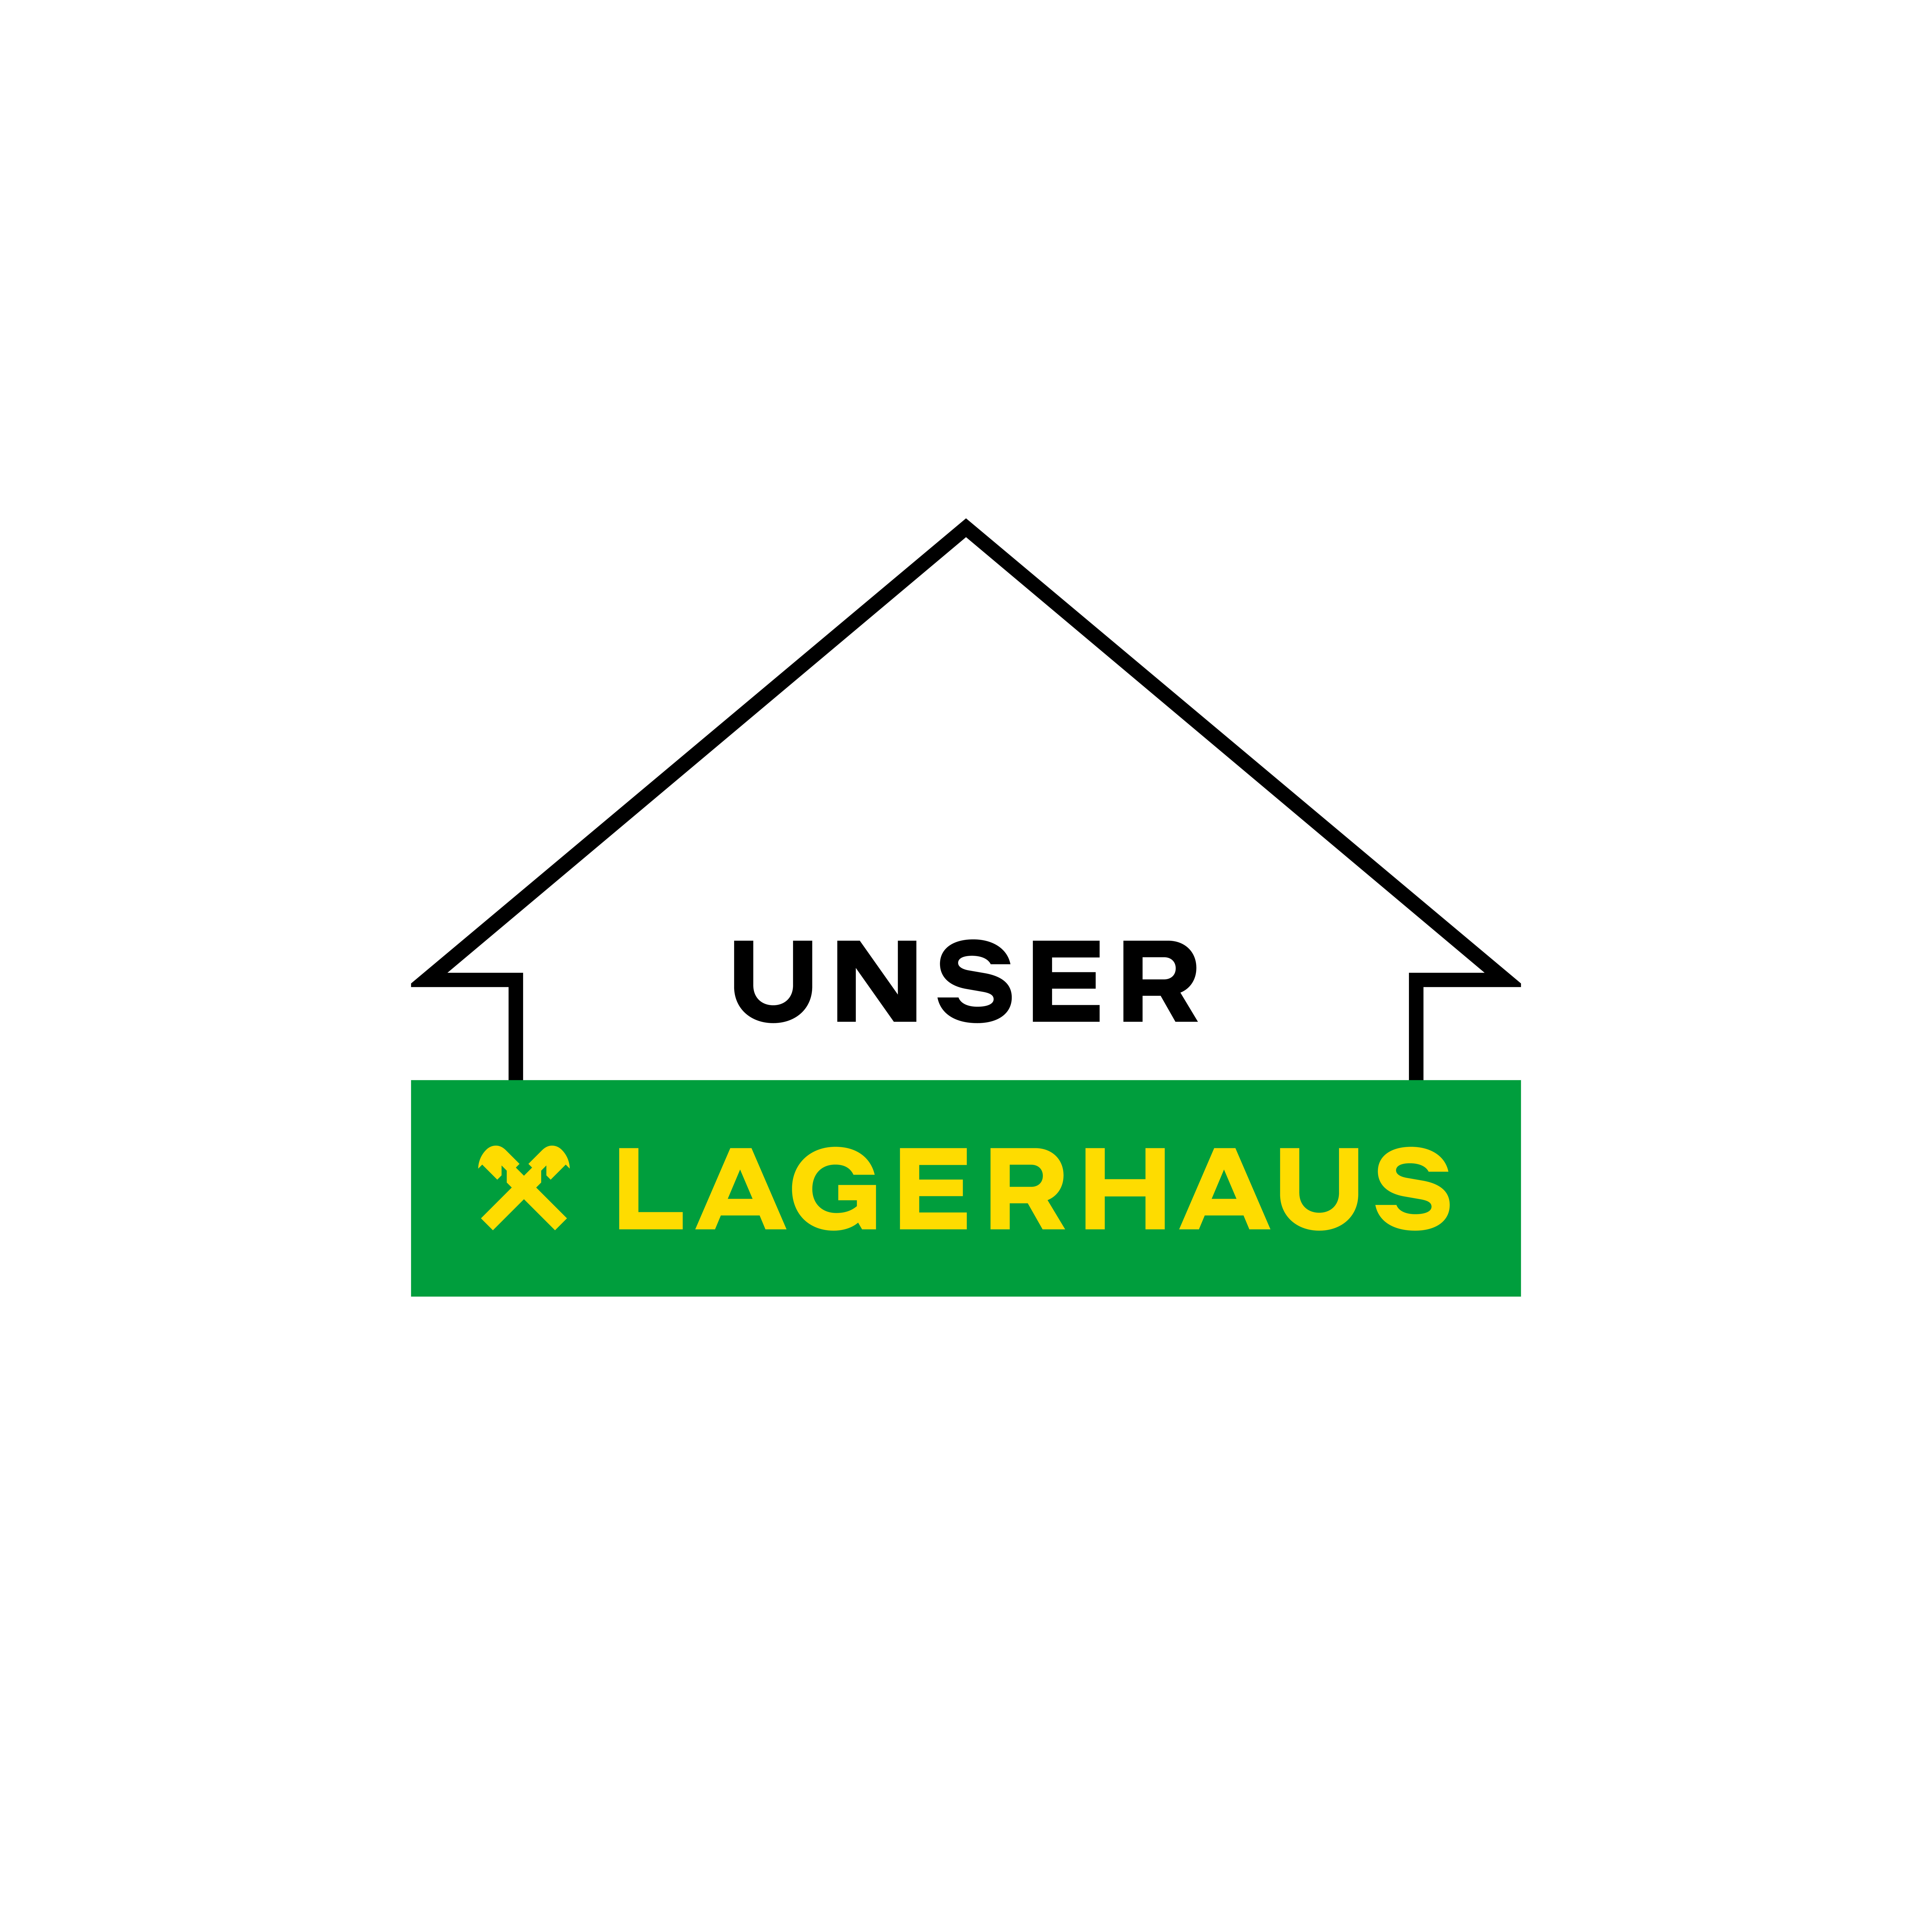 LAGERHAUS - Unser Lagerhaus Warenhandels GmbH in St. Johann in Tirol